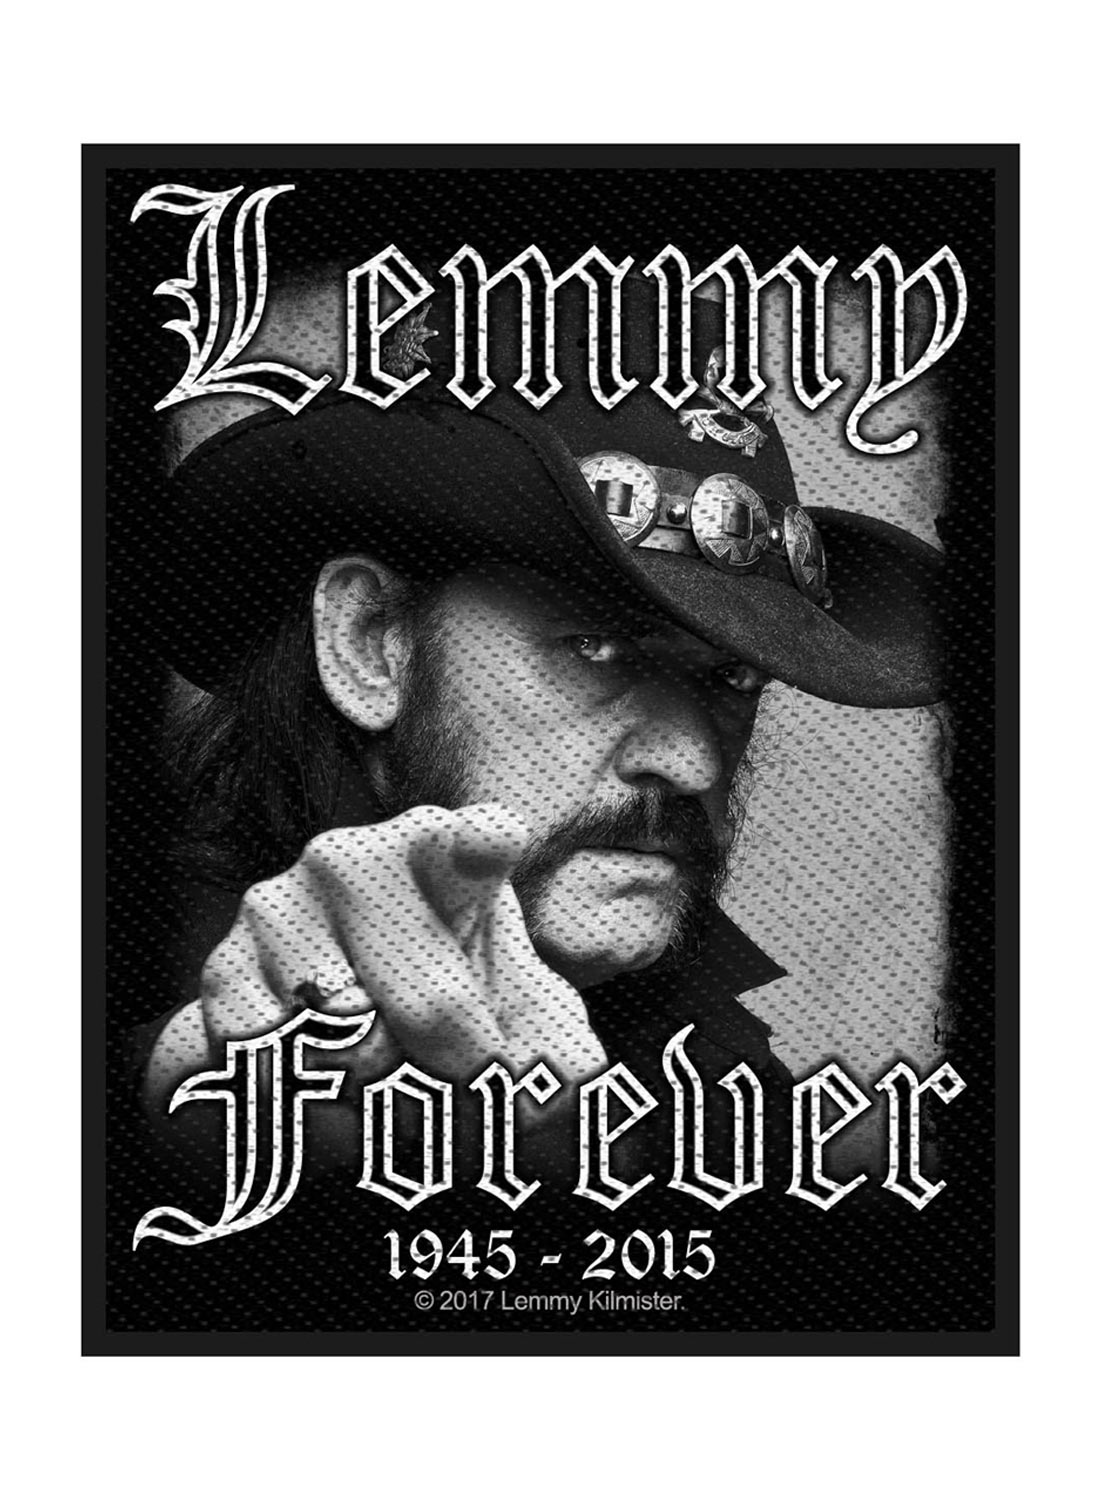 Lemmy Forever Patch